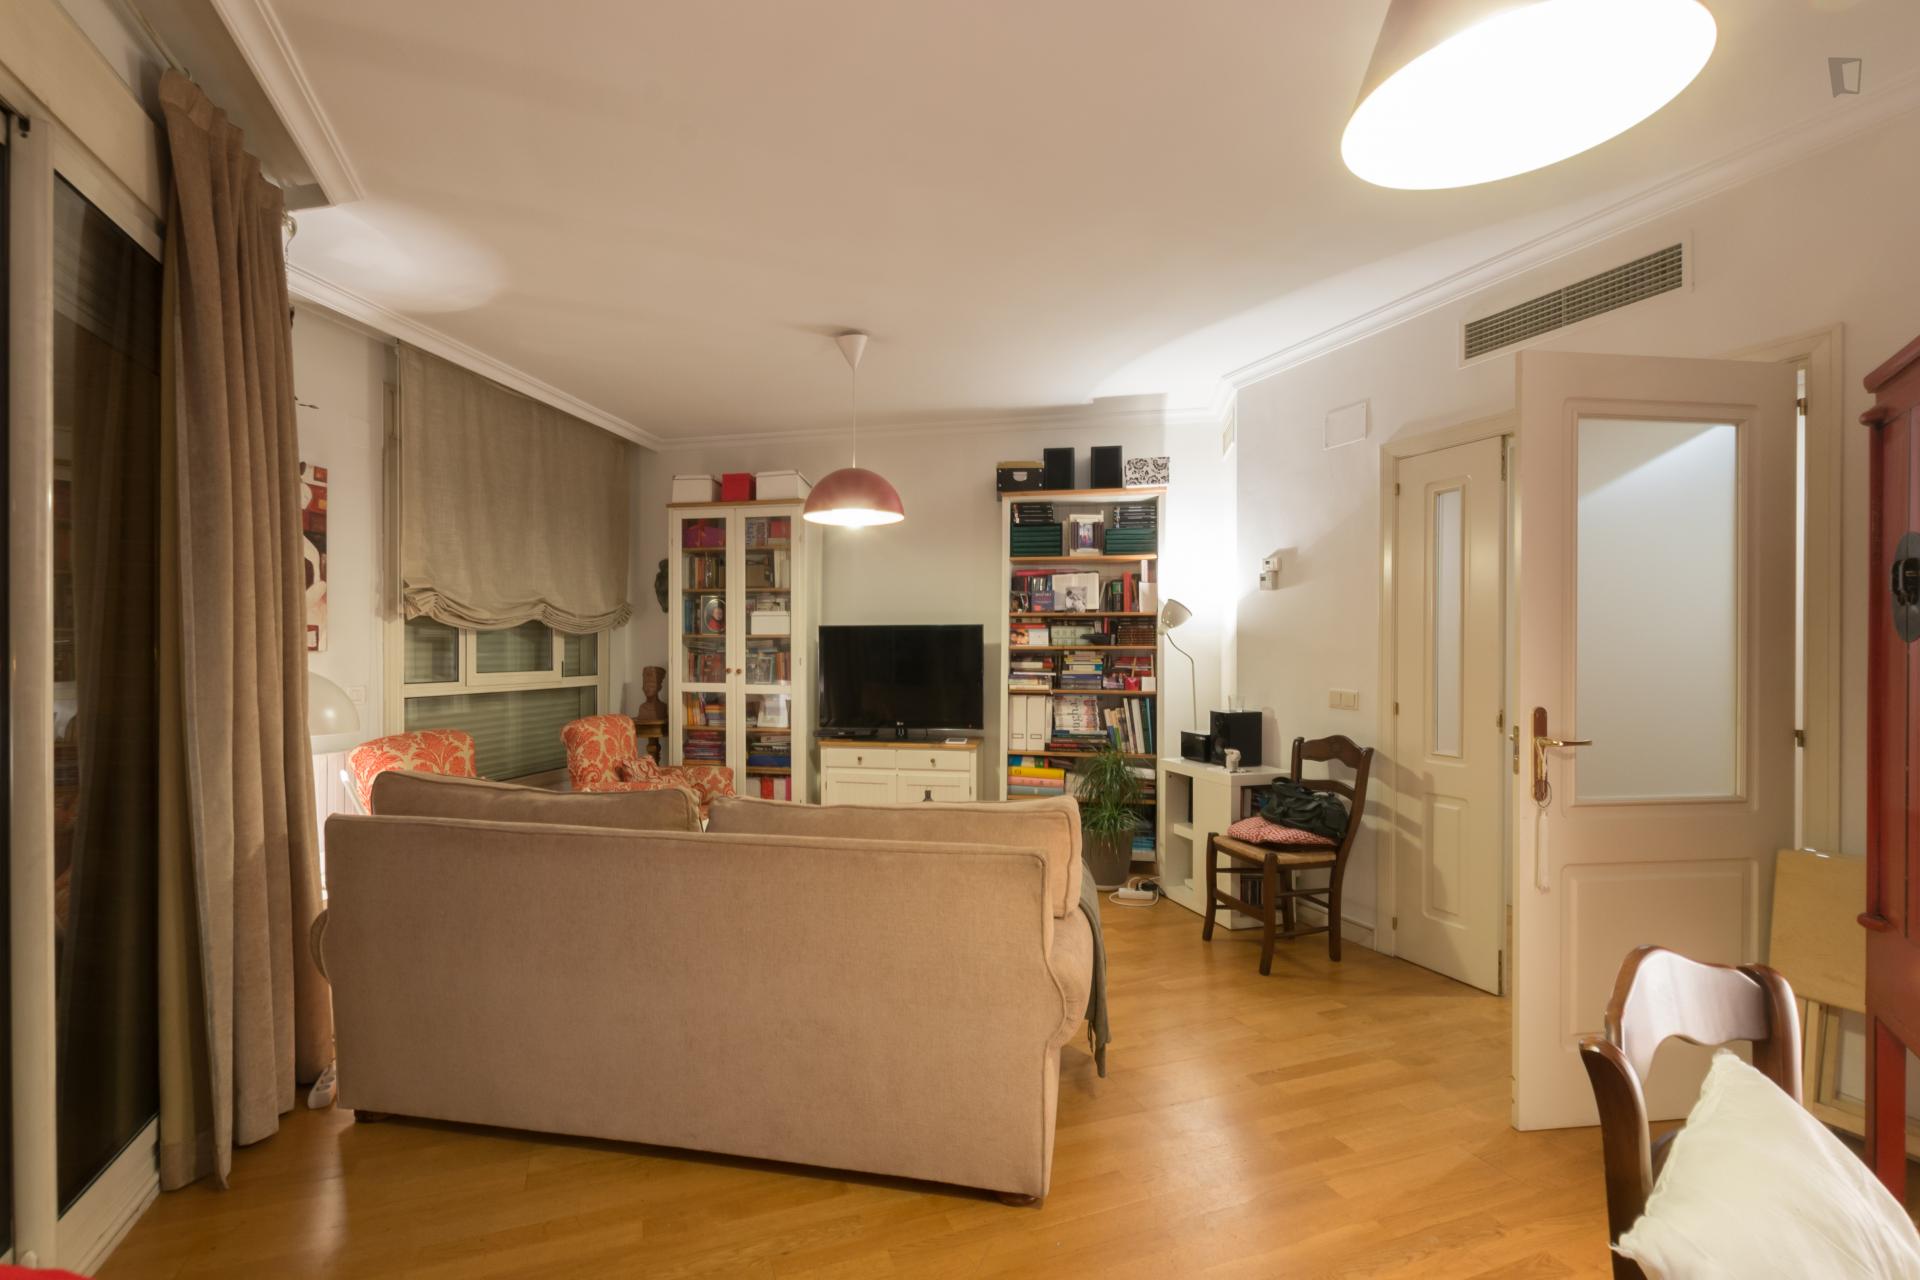 Ermita - Bedroom in shared flat in Madrid